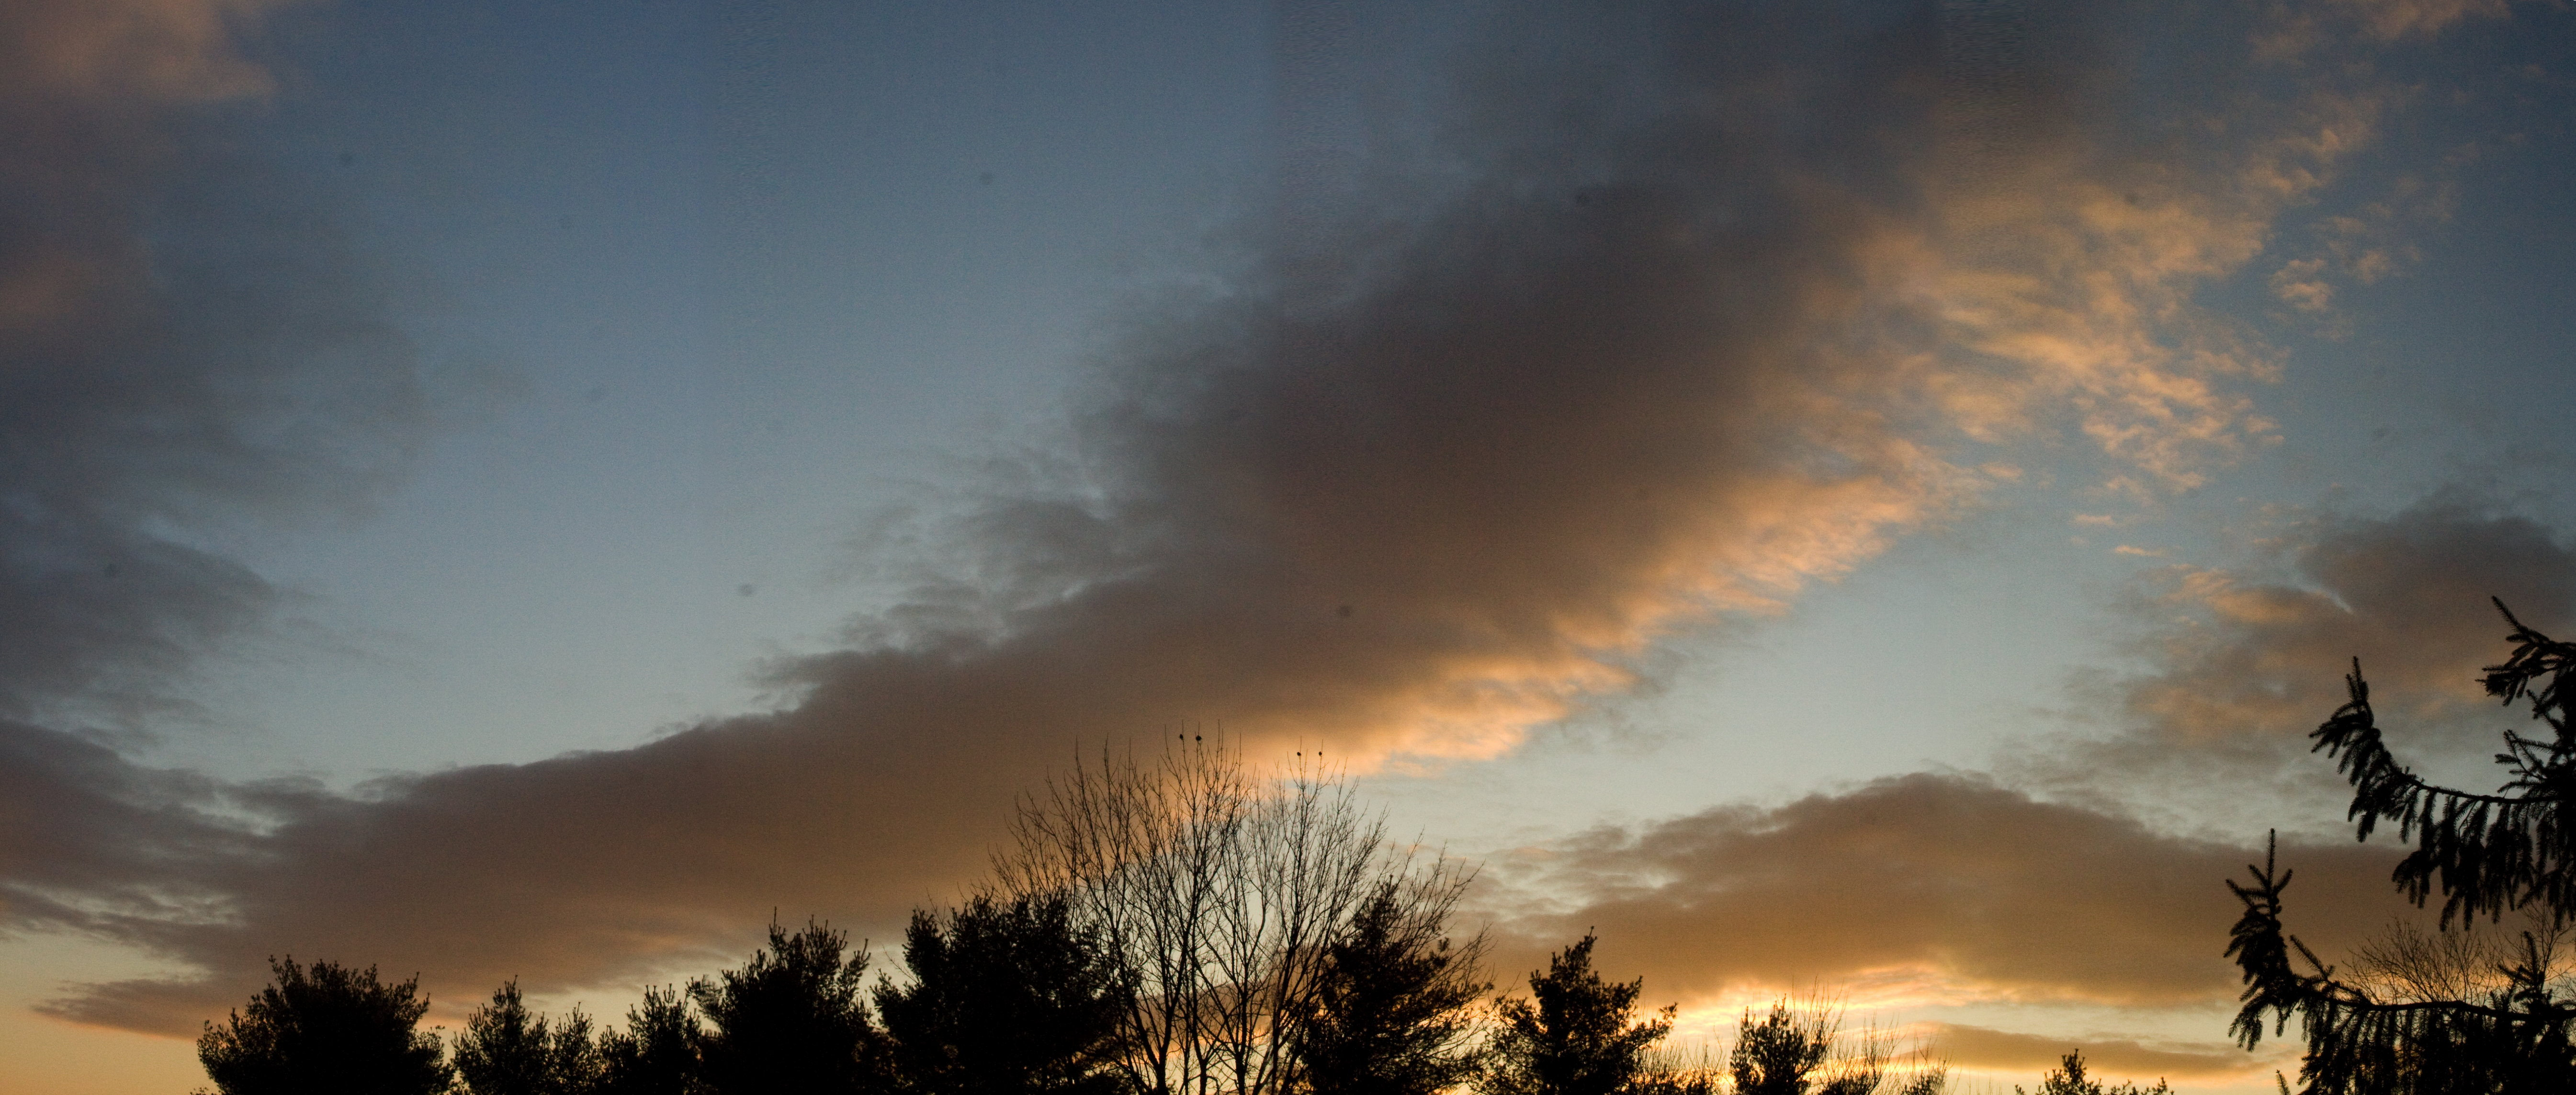 Dawn Panorama, January 27, 2010